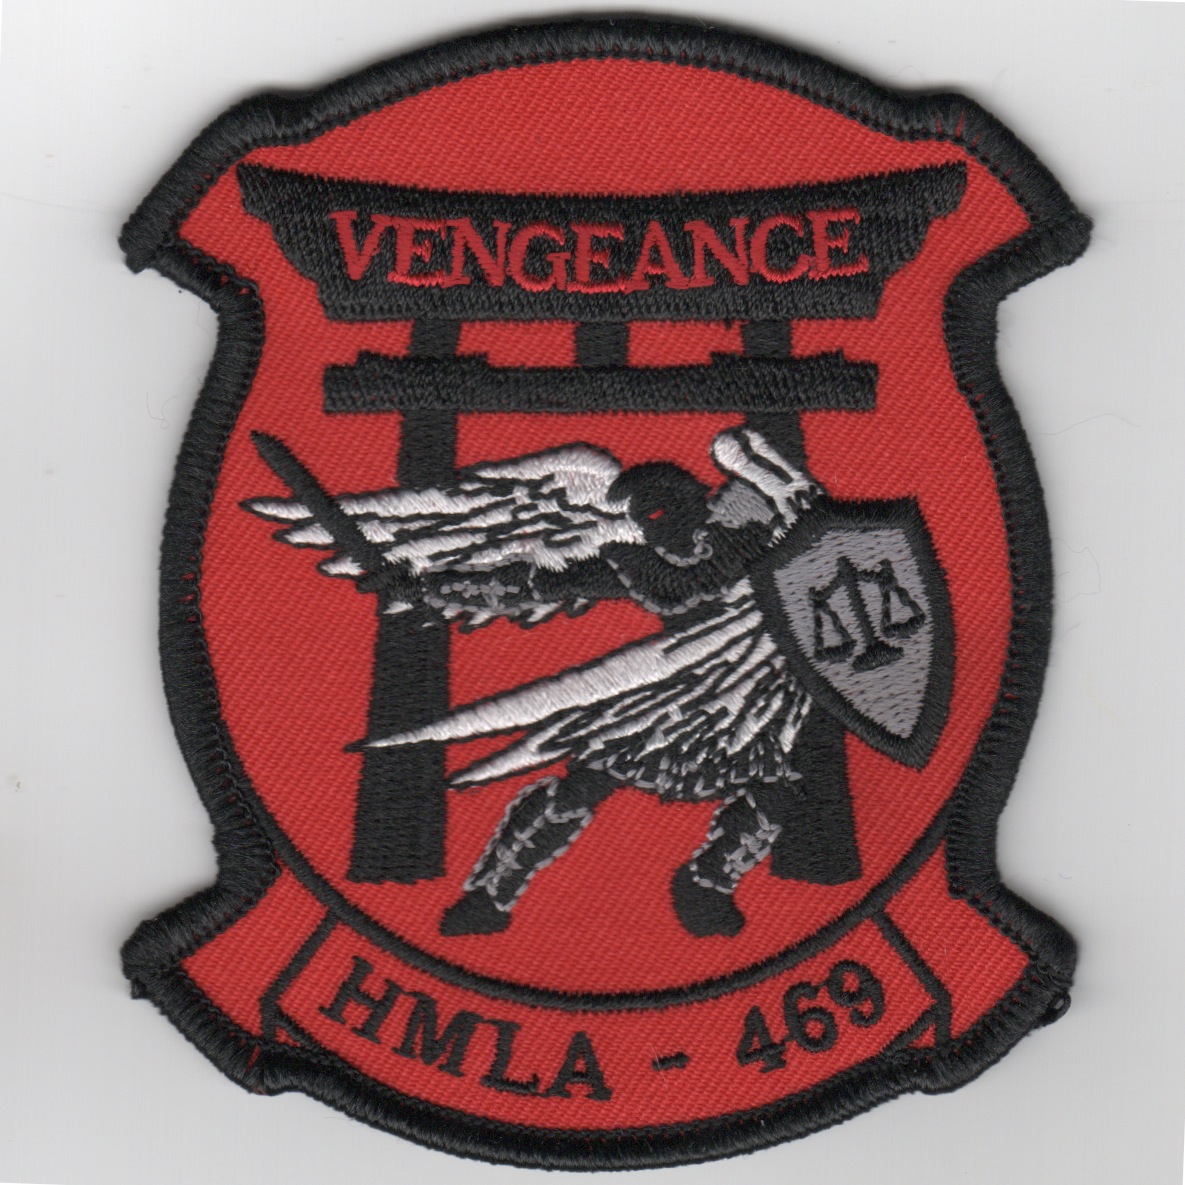 HMLA-469 'Vengeance' (Red)